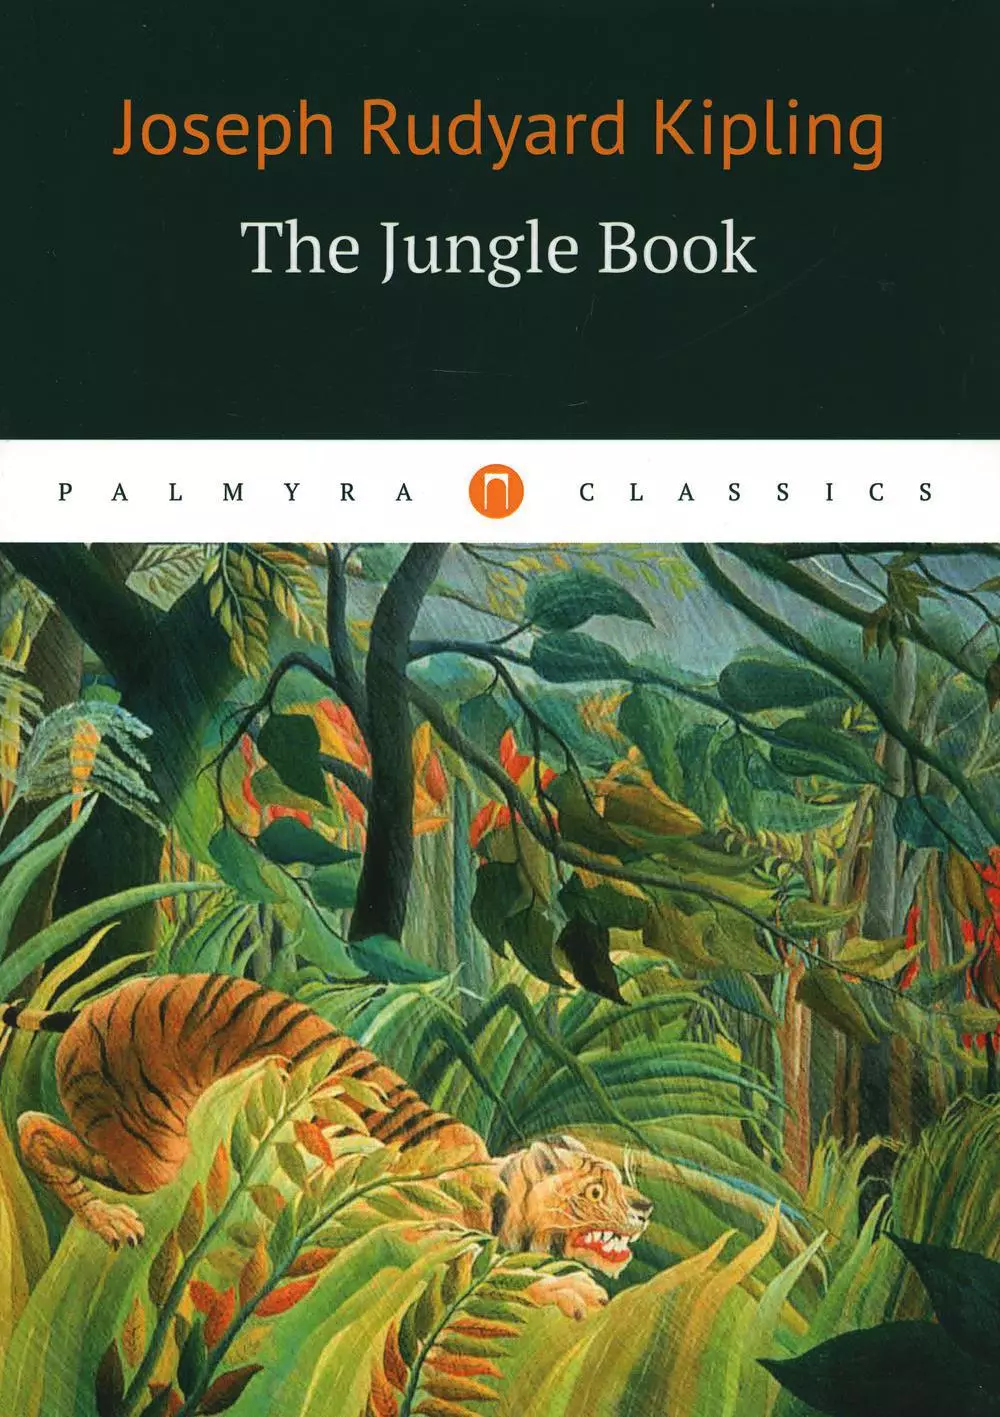 Kipling Joseph Rudyard The Jungle Book